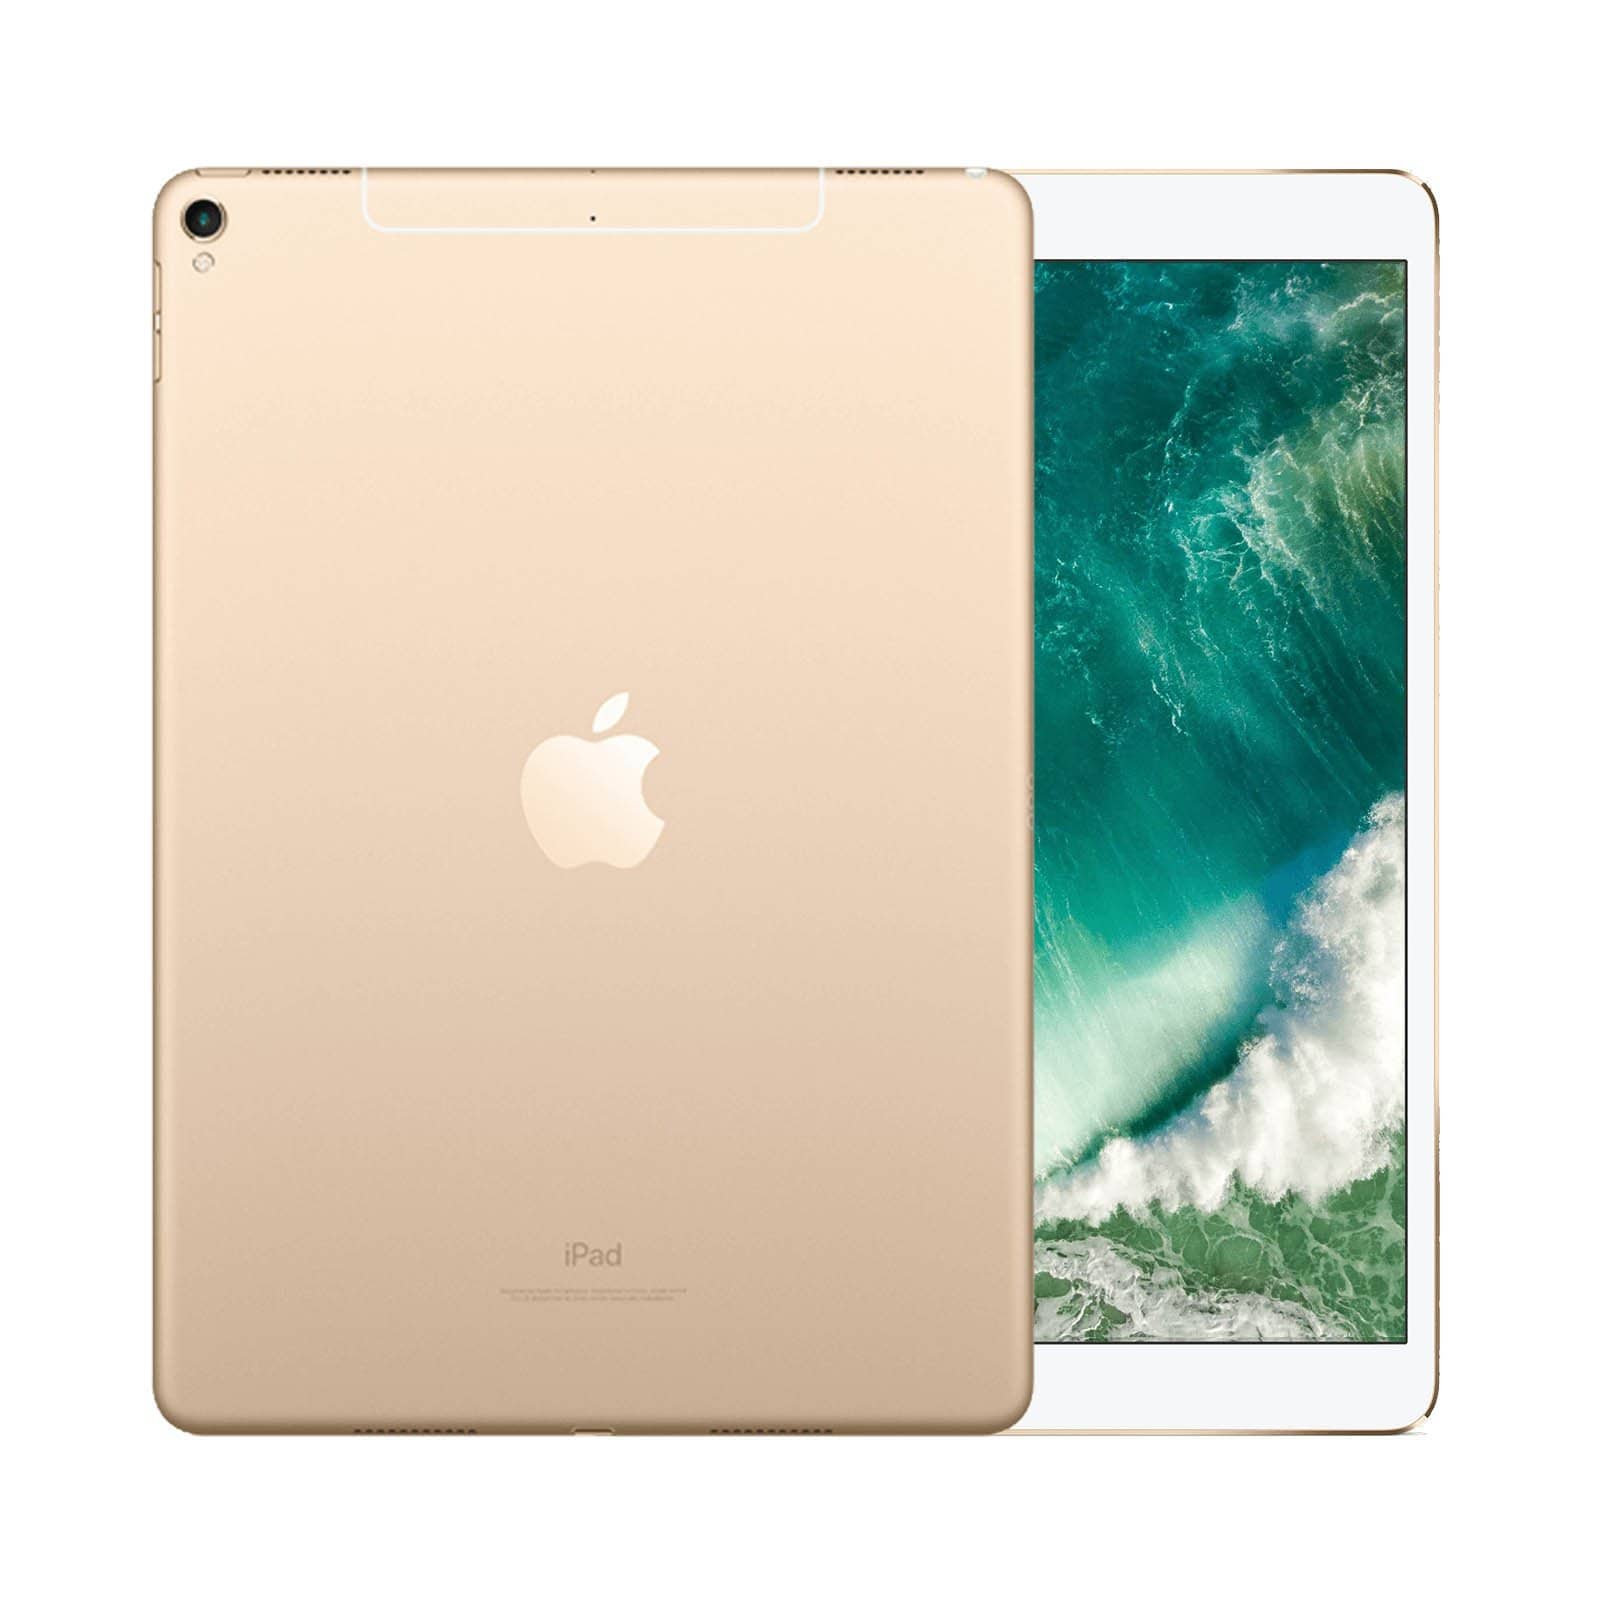 iPad Pro 10.5 Inch 64GB Gold Pristine - Unlocked 64GB Gold Pristine